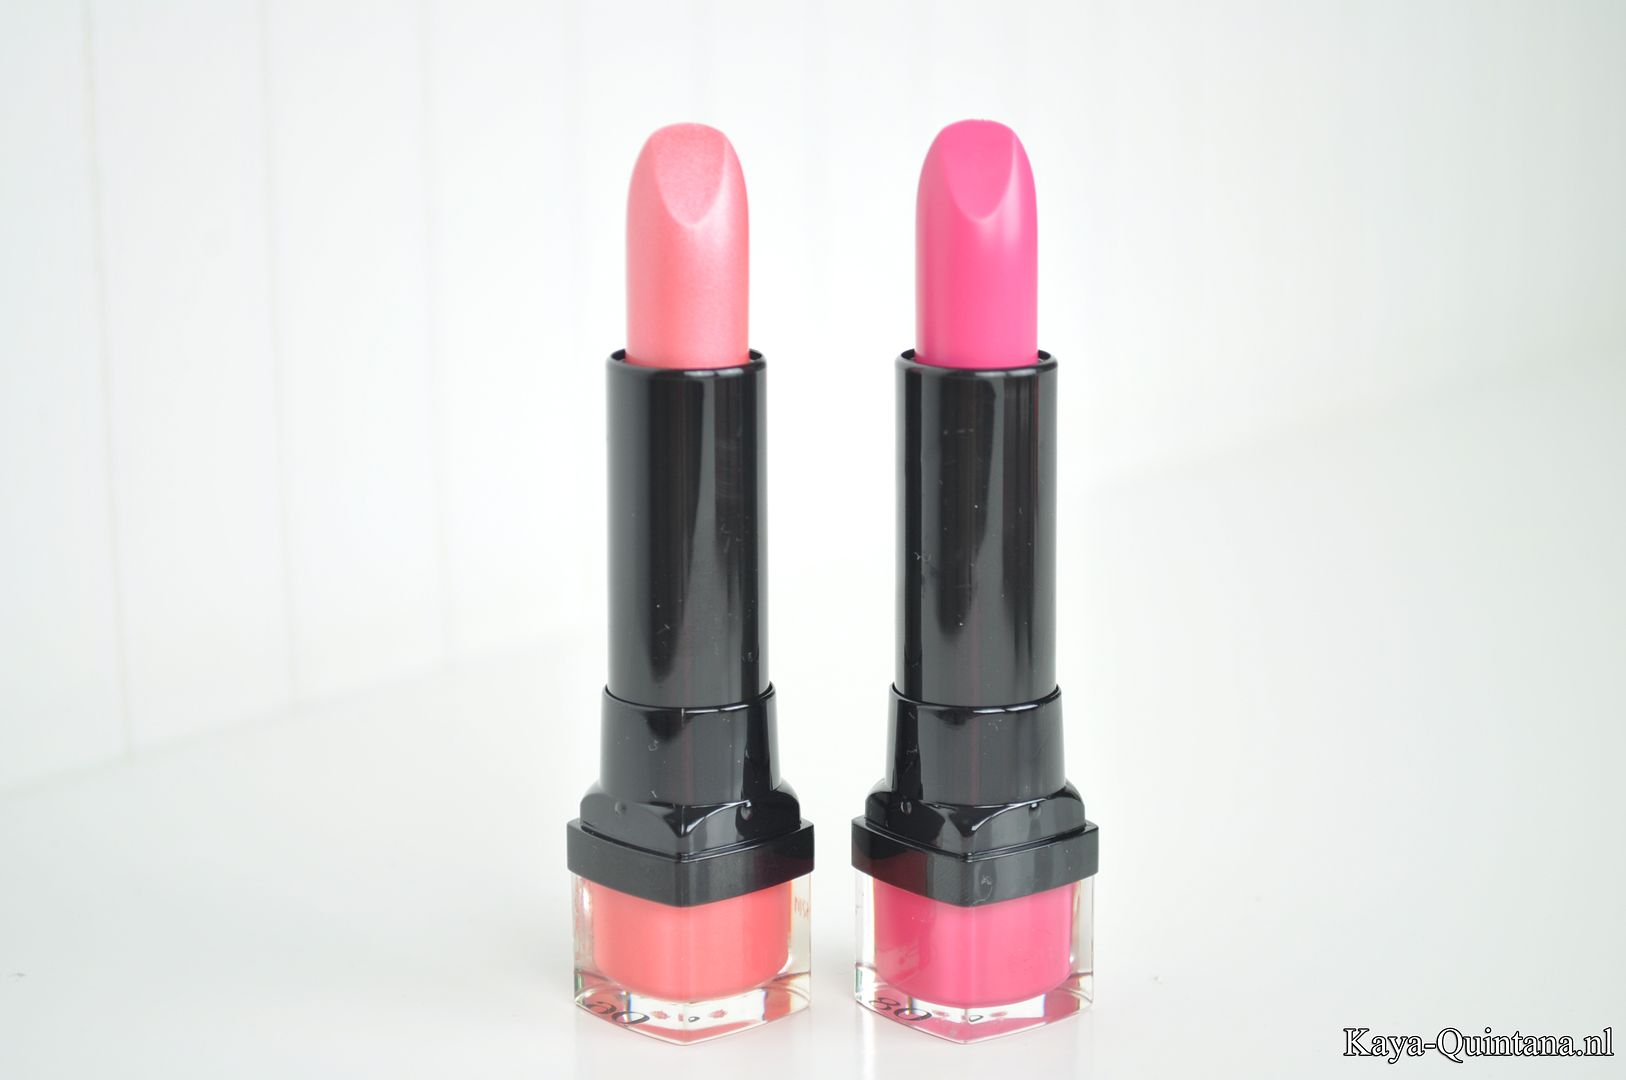 Bourjois rouge edition lipstick swatches